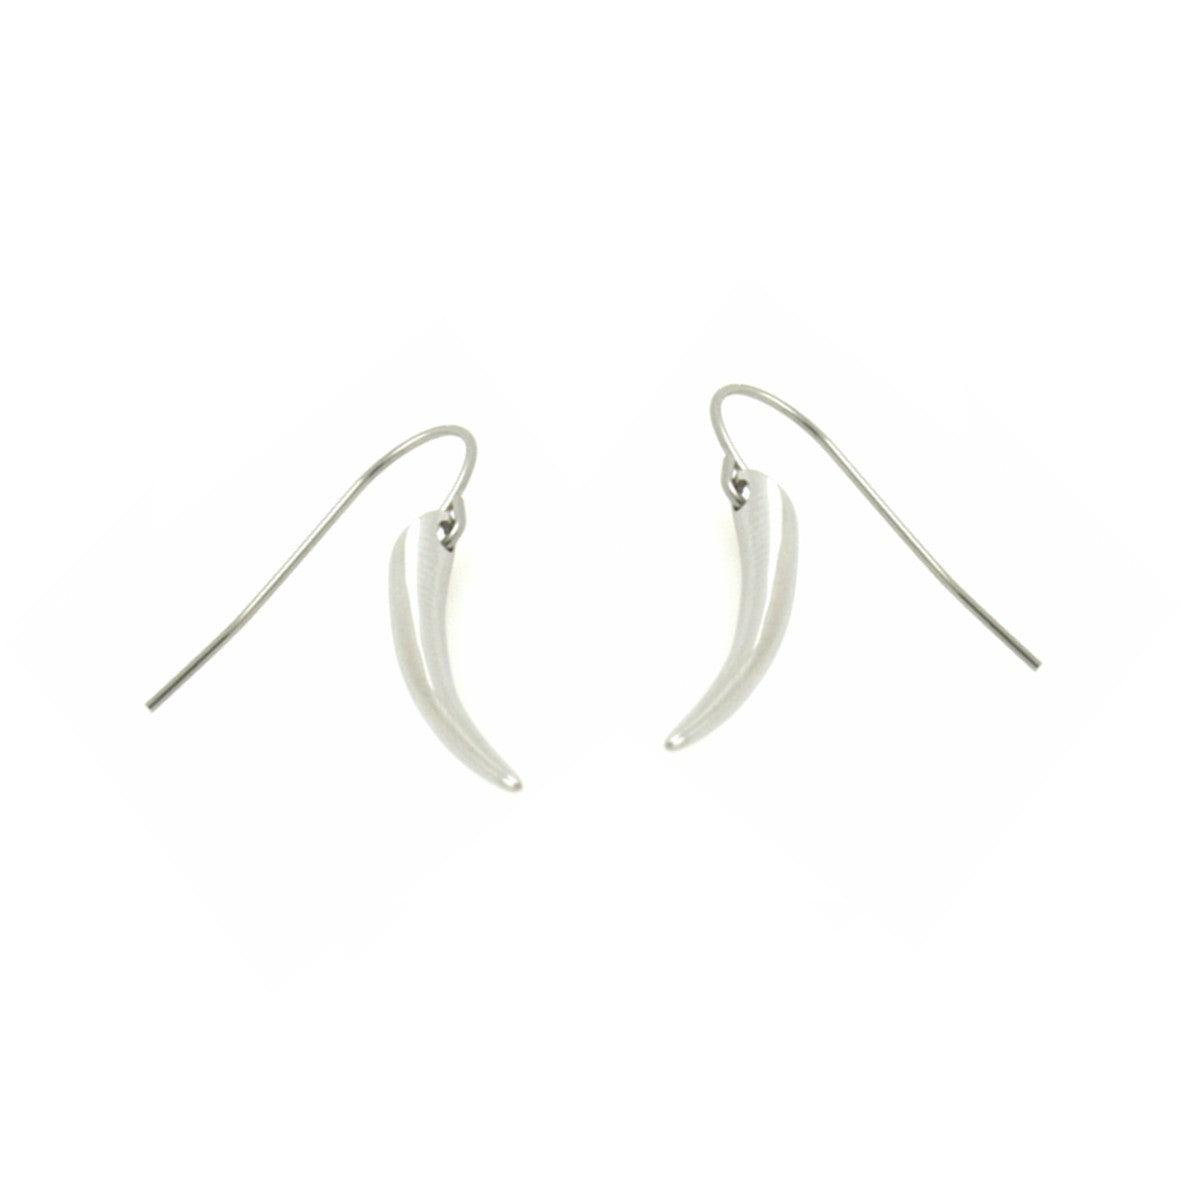 Stainless Steel Silver Hook Earrings